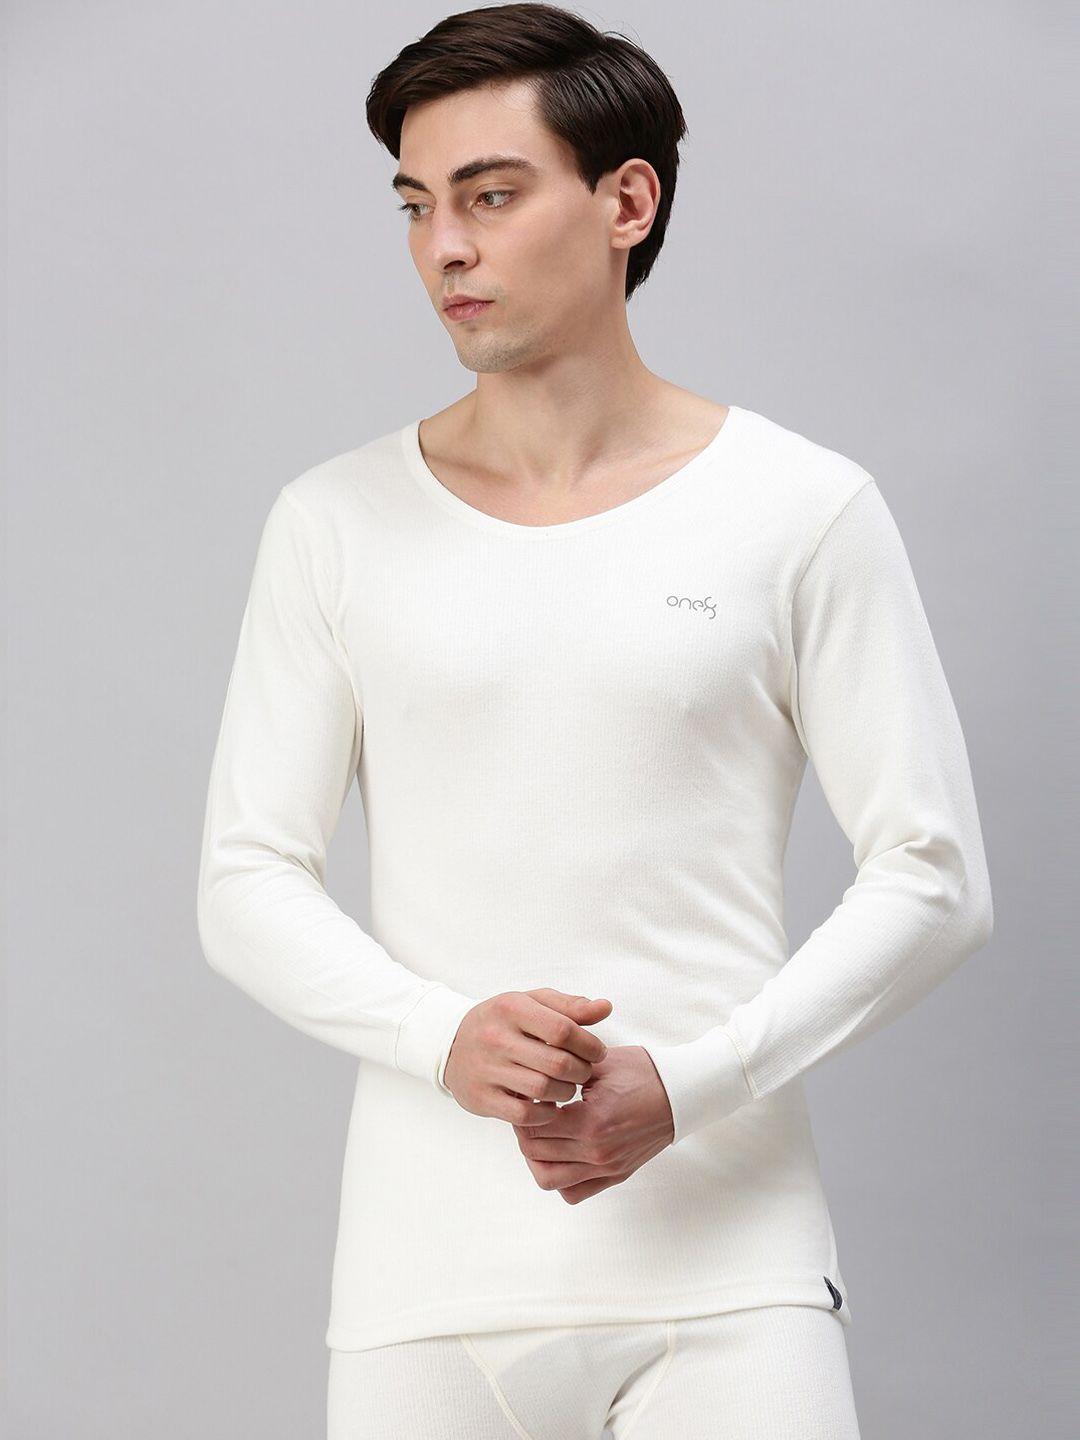 one8-by-virat-kohli-men-white-solid-cotton-thermal-tops